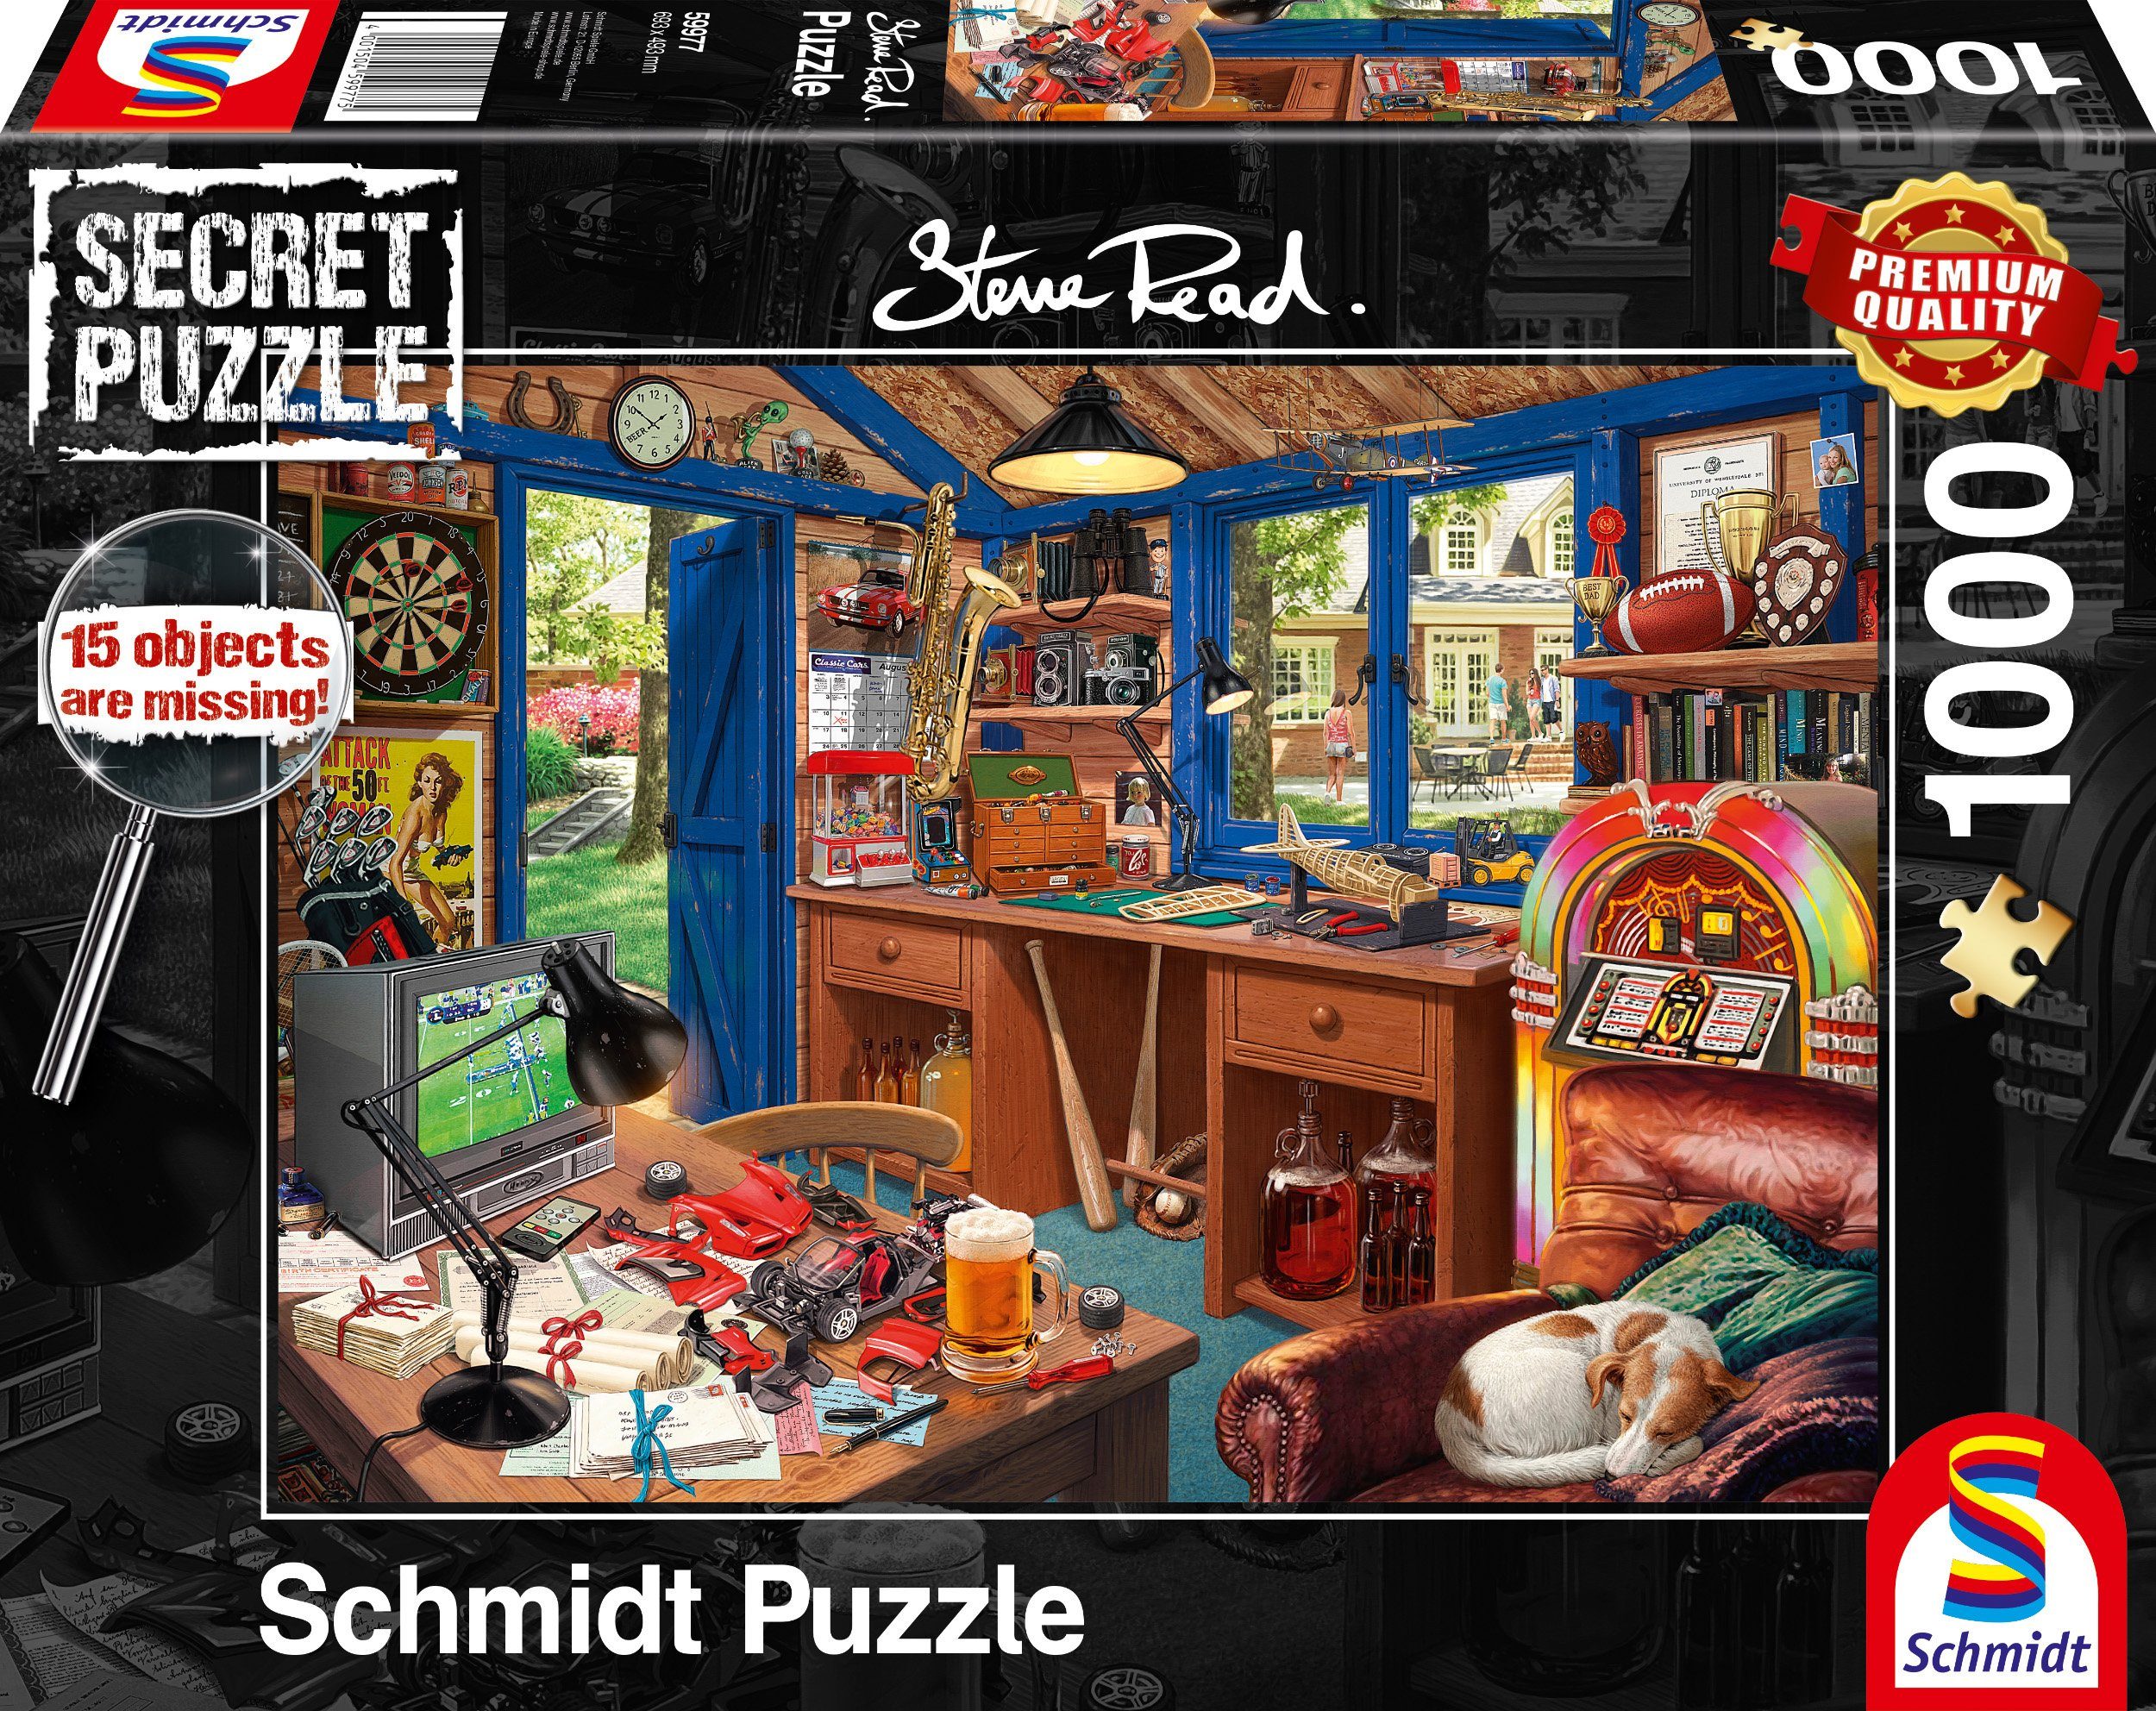 Secret Spiele Werkstatt, Vaters Puzzle, in Puzzleteile, Made Europe 1000 Puzzle Schmidt